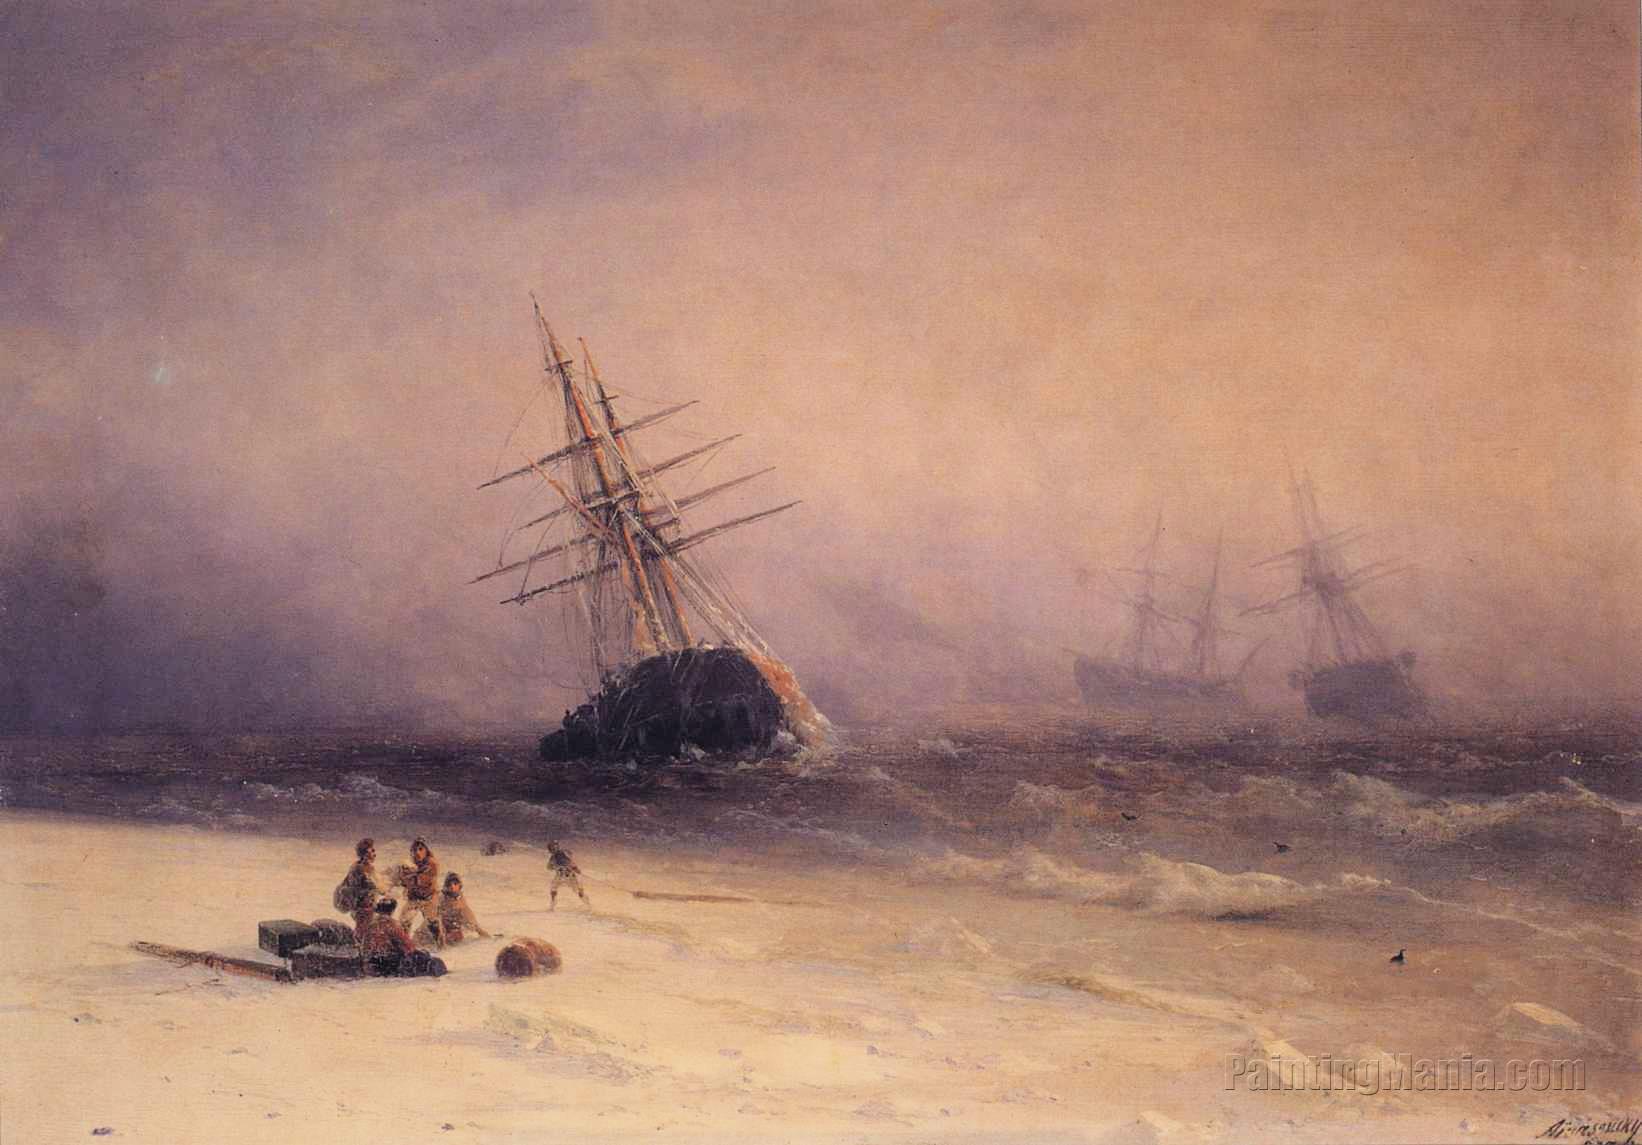 The Shipwreck on Northern Sea 2